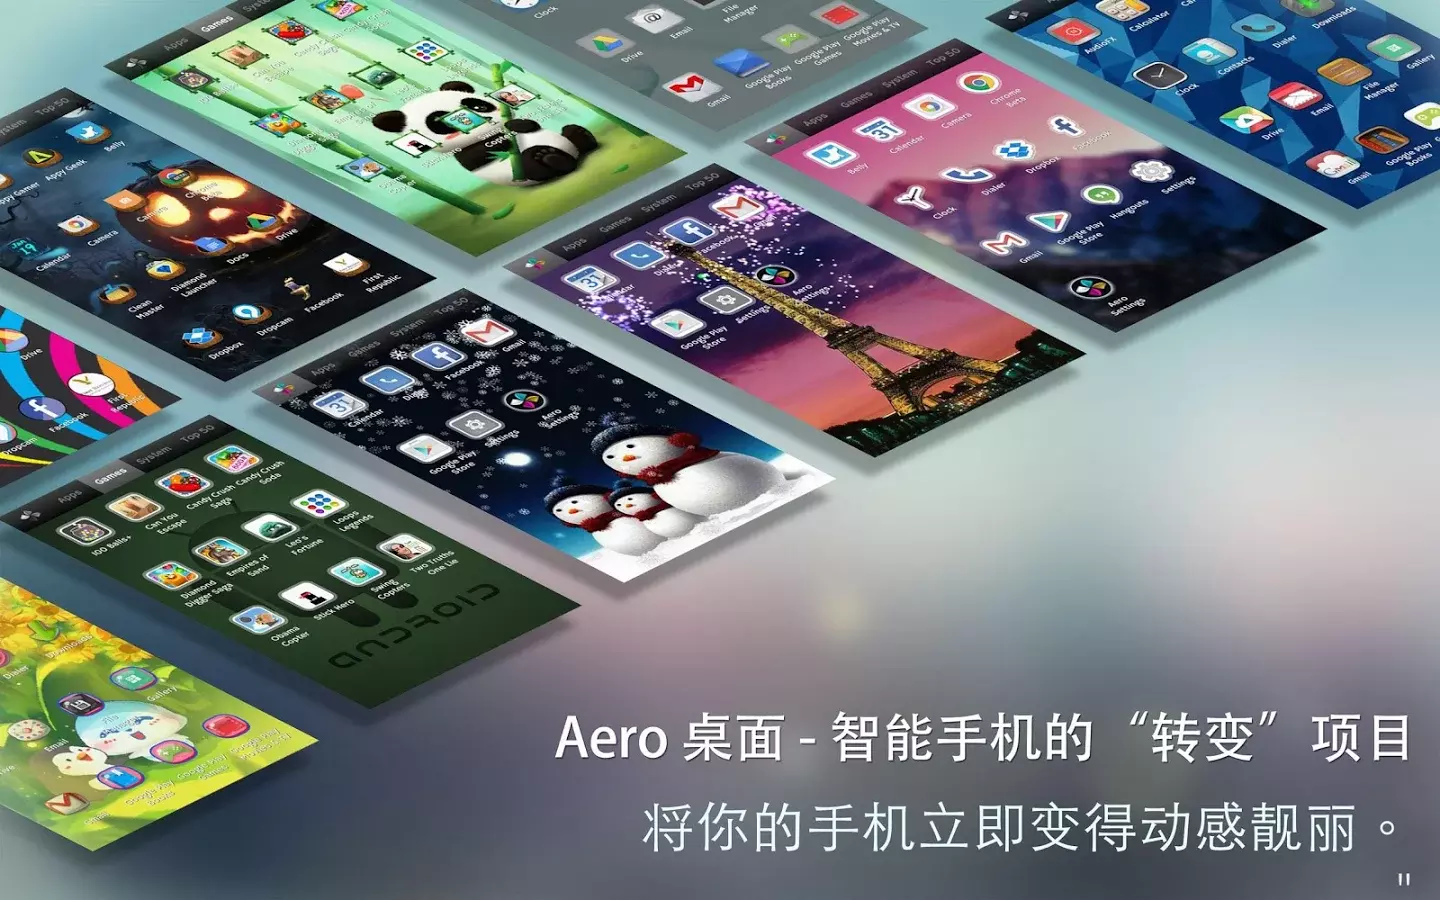 Aero 桌面 - 智能手机的“转变”项目截图3